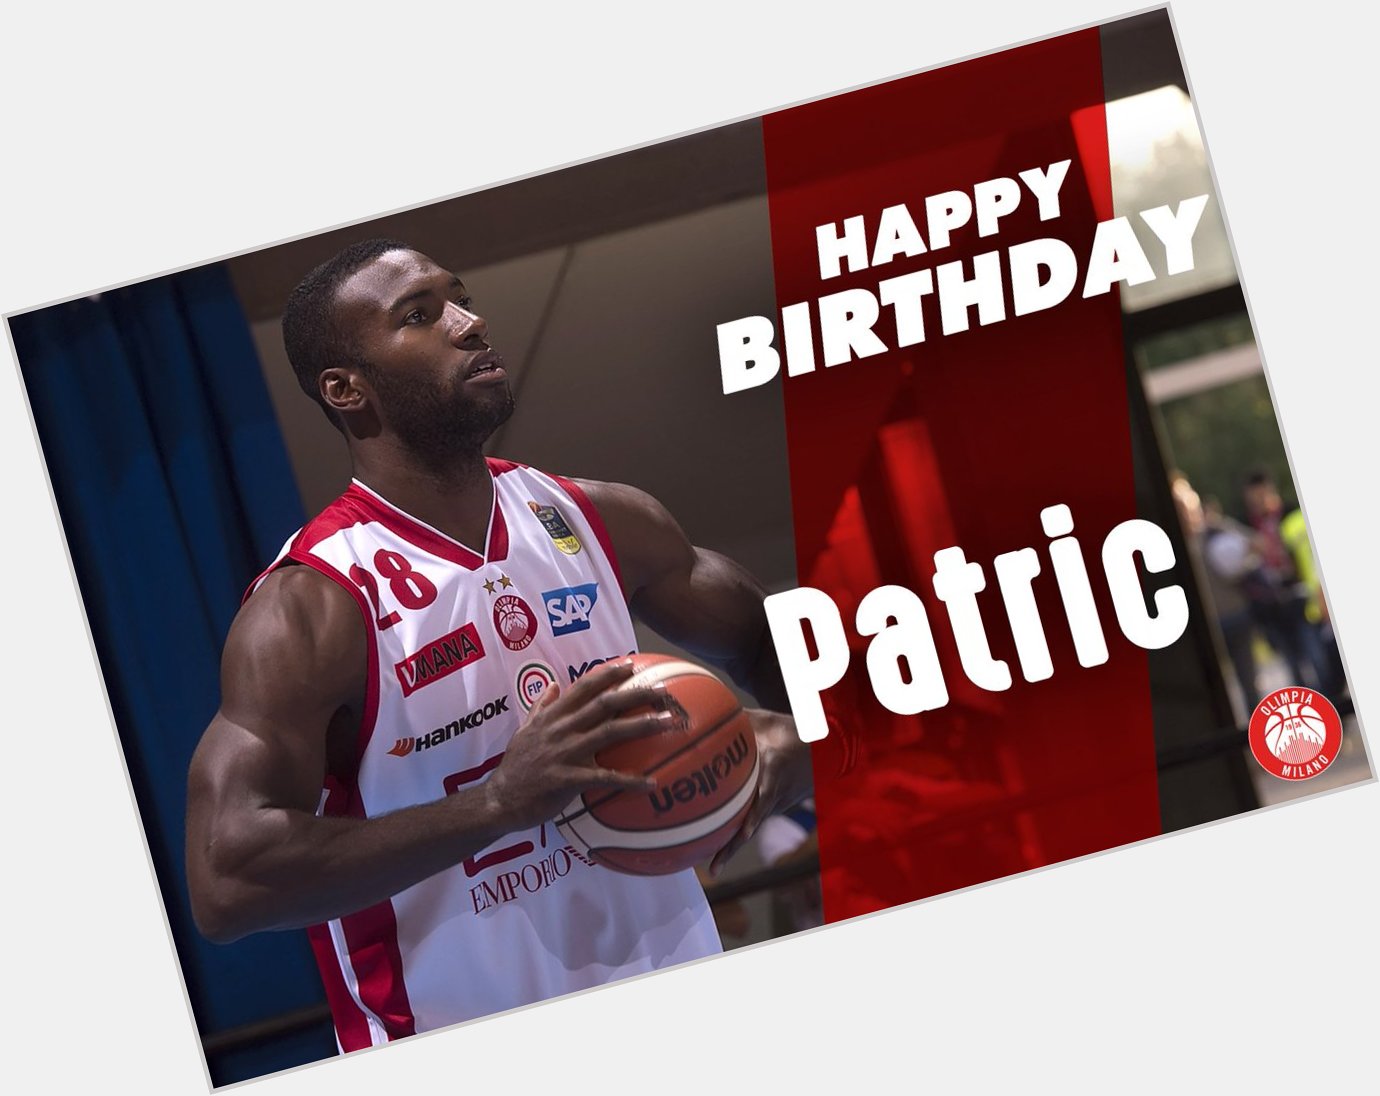 Happy birthday Patric Young 